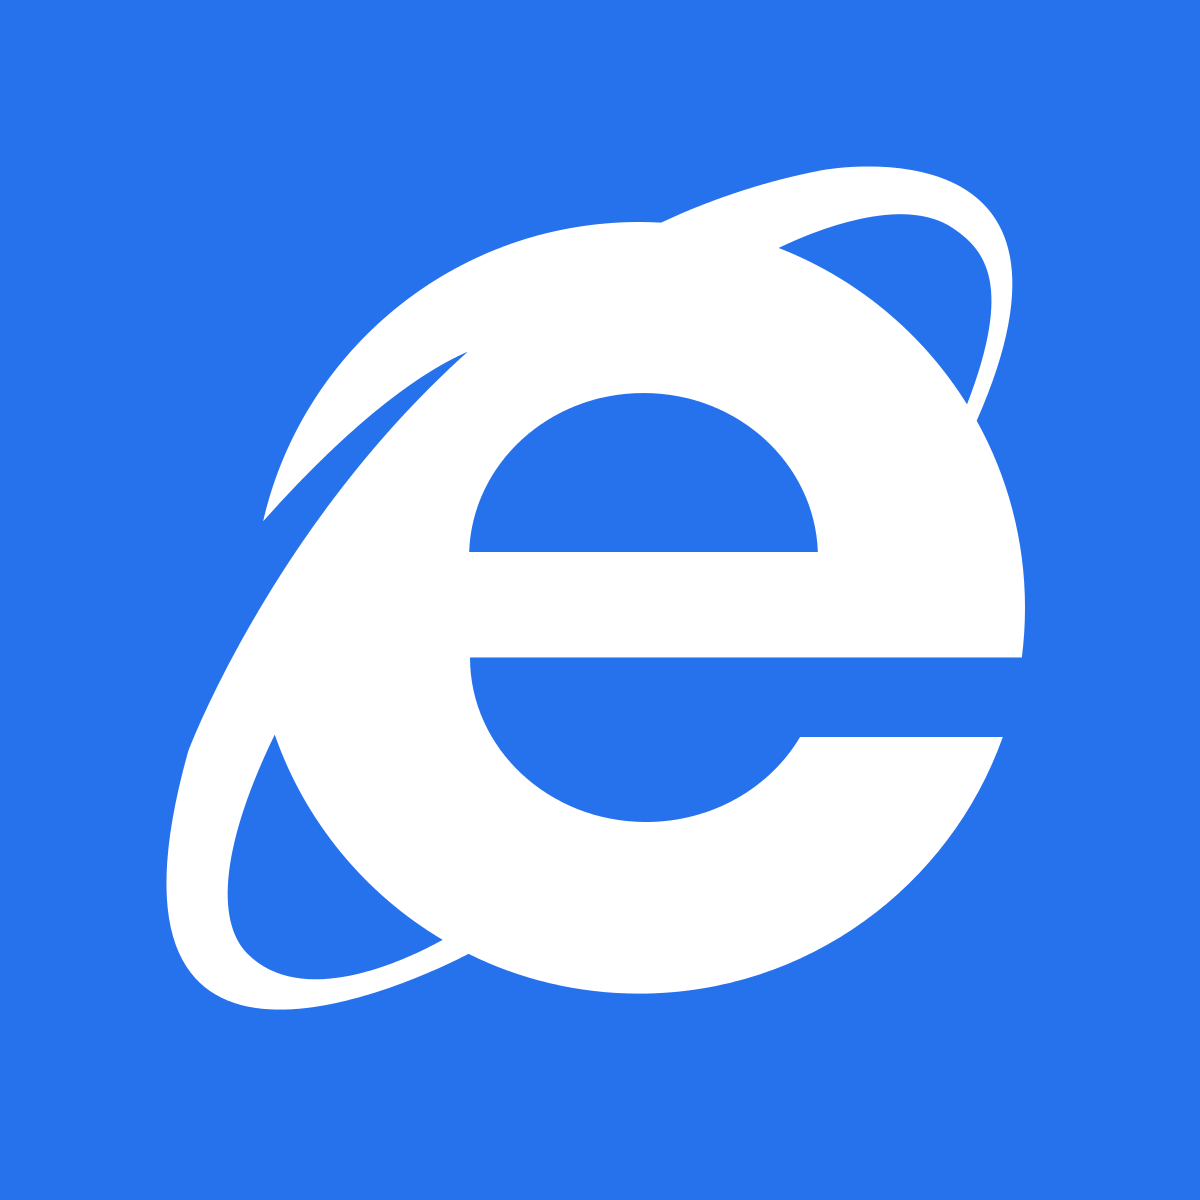 MSIE Logo - Internet Explorer Mobile